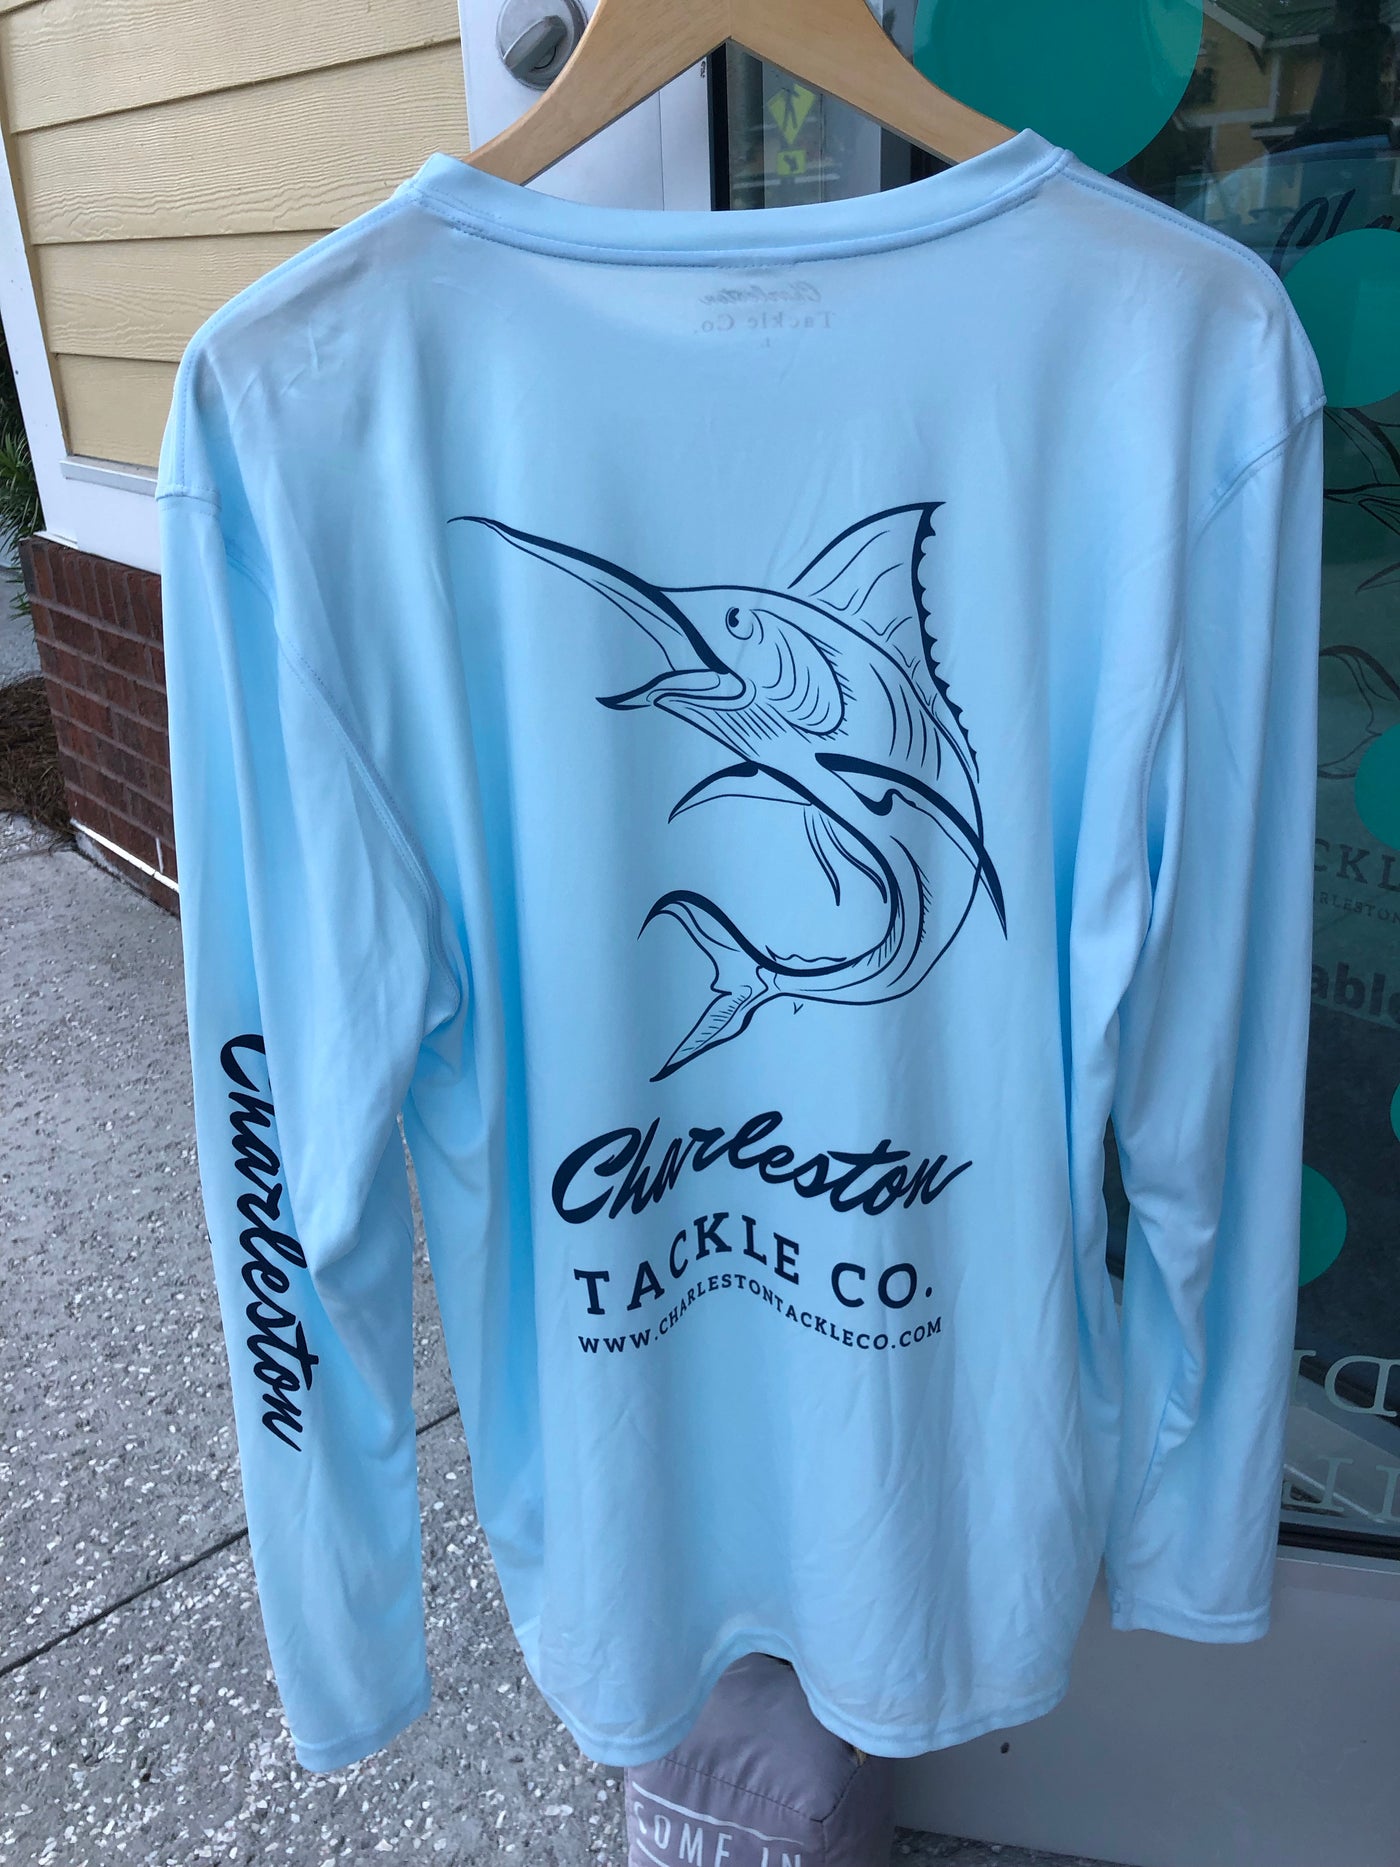 Charleston Tackle Co Long Sleeve PFG Fishing Shirt - Mens White / S